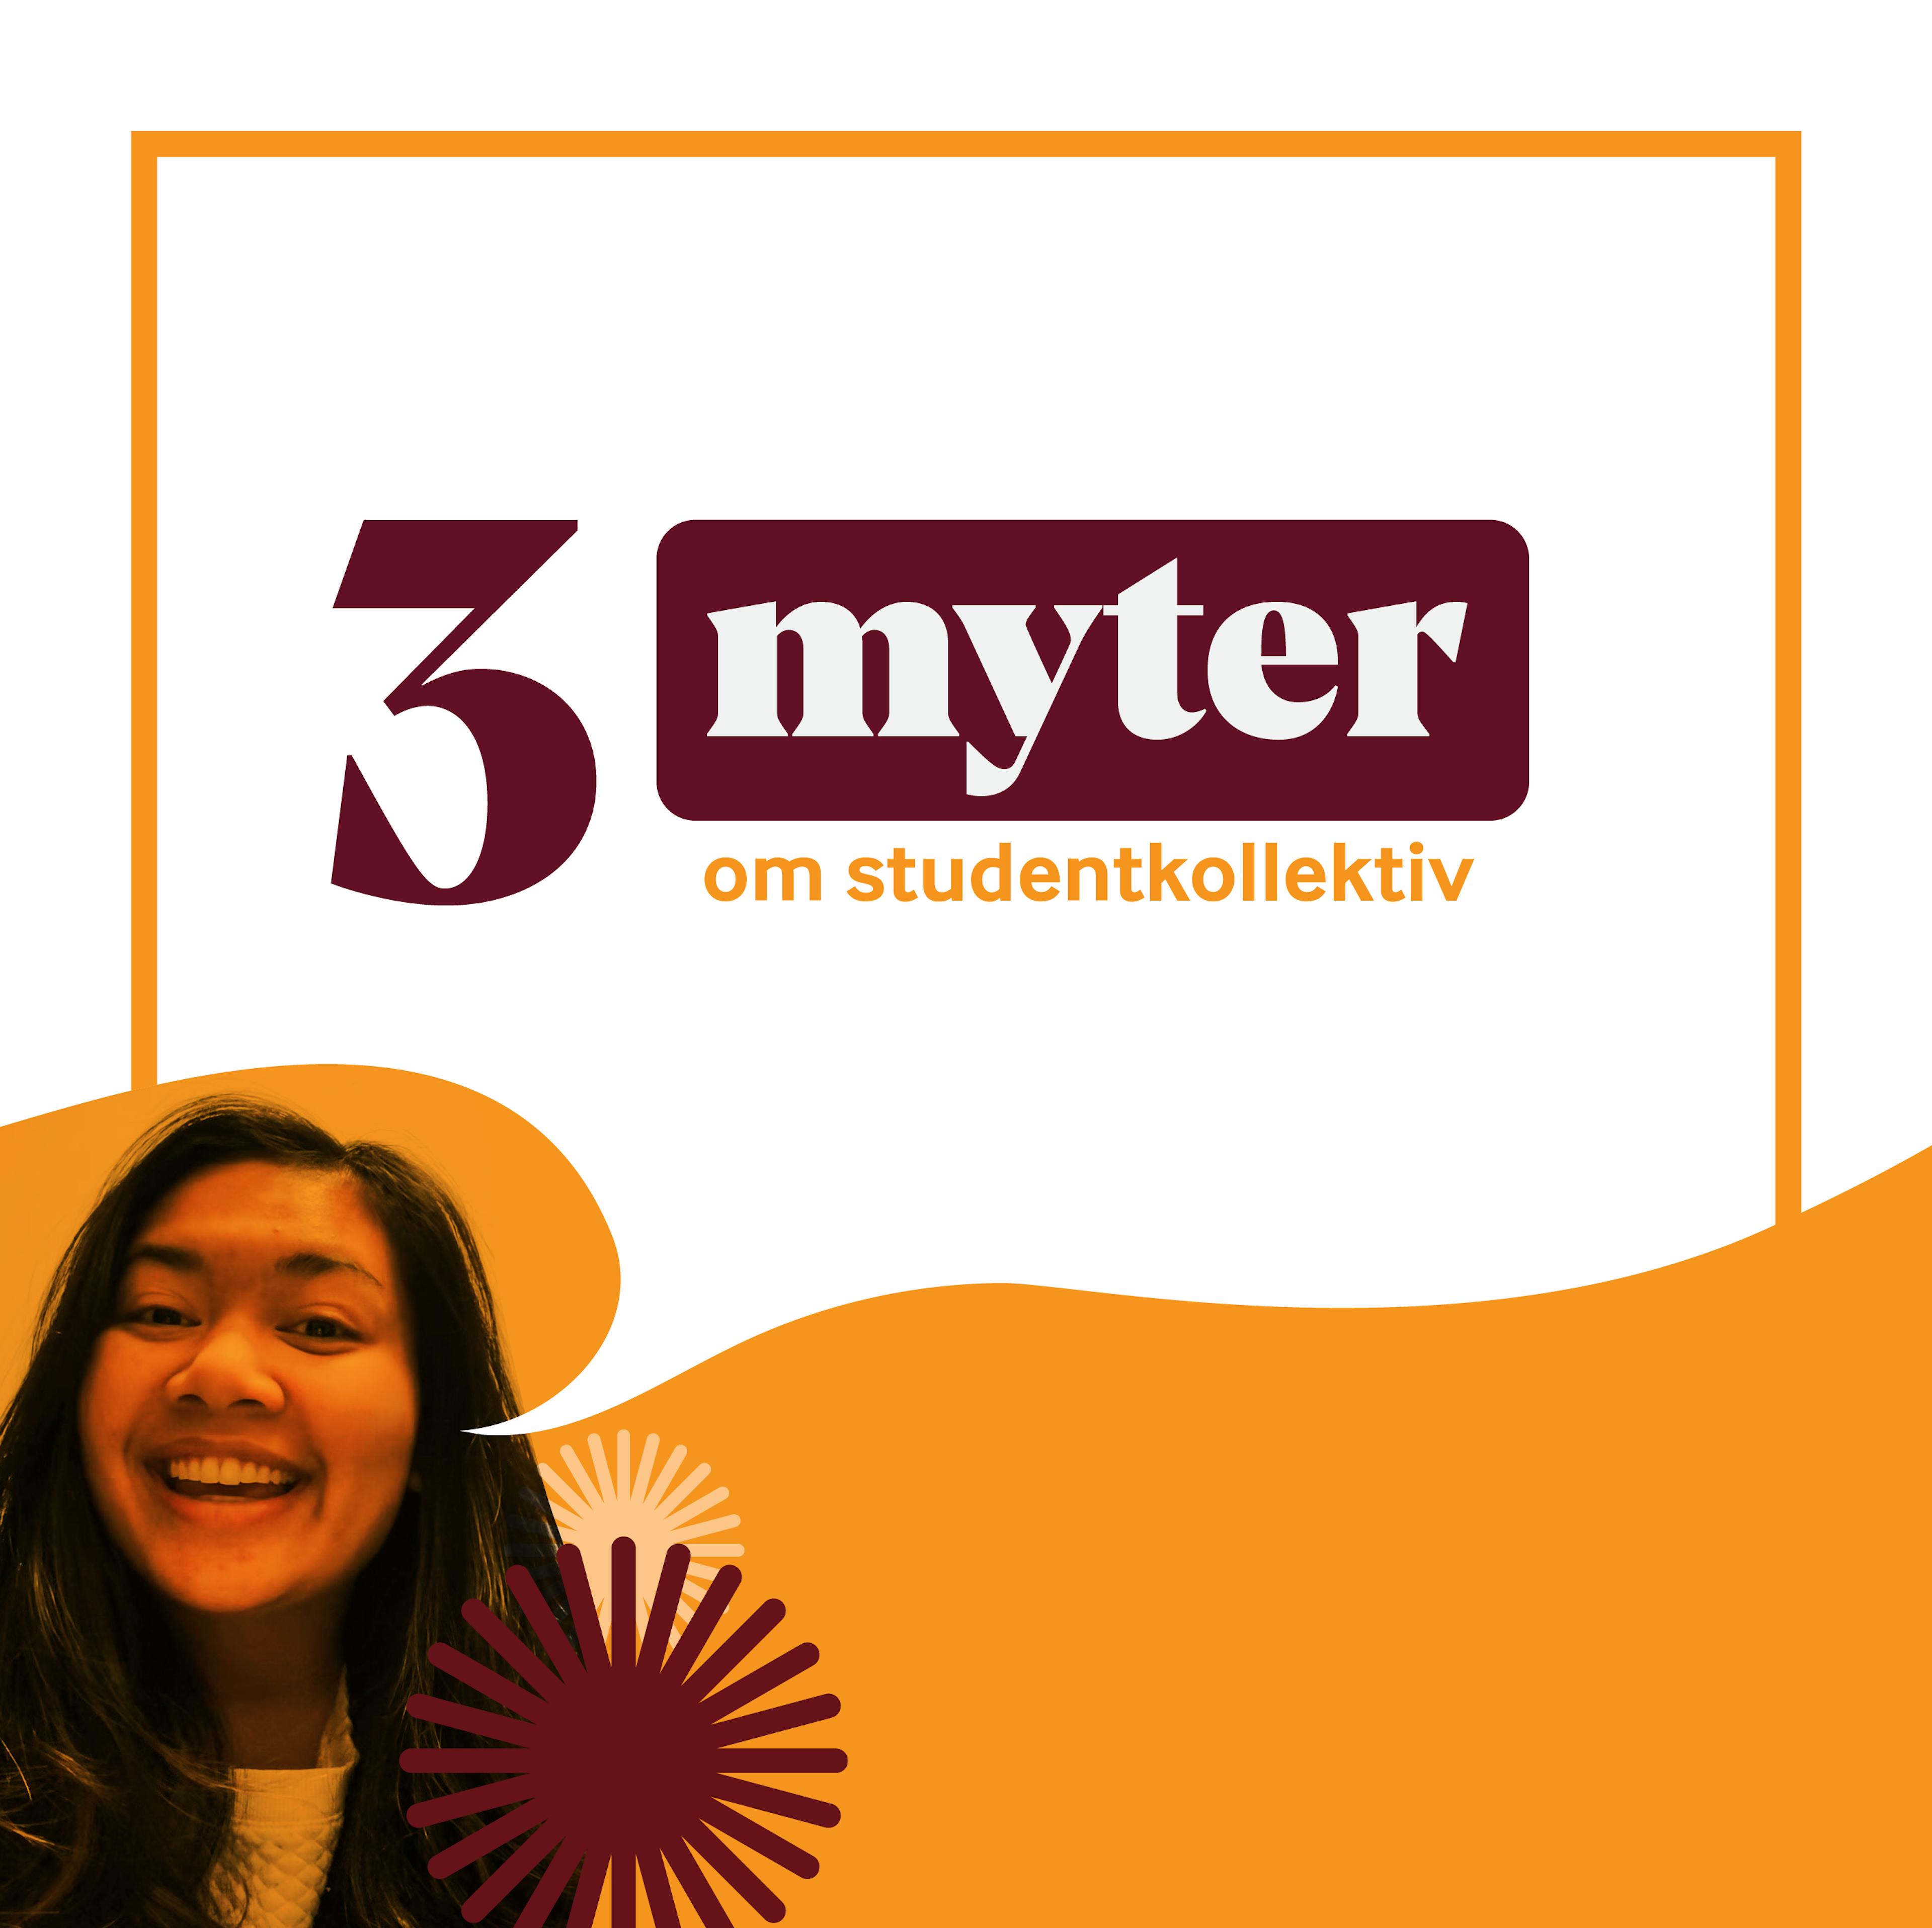 3 myter om studentkollektiv 04